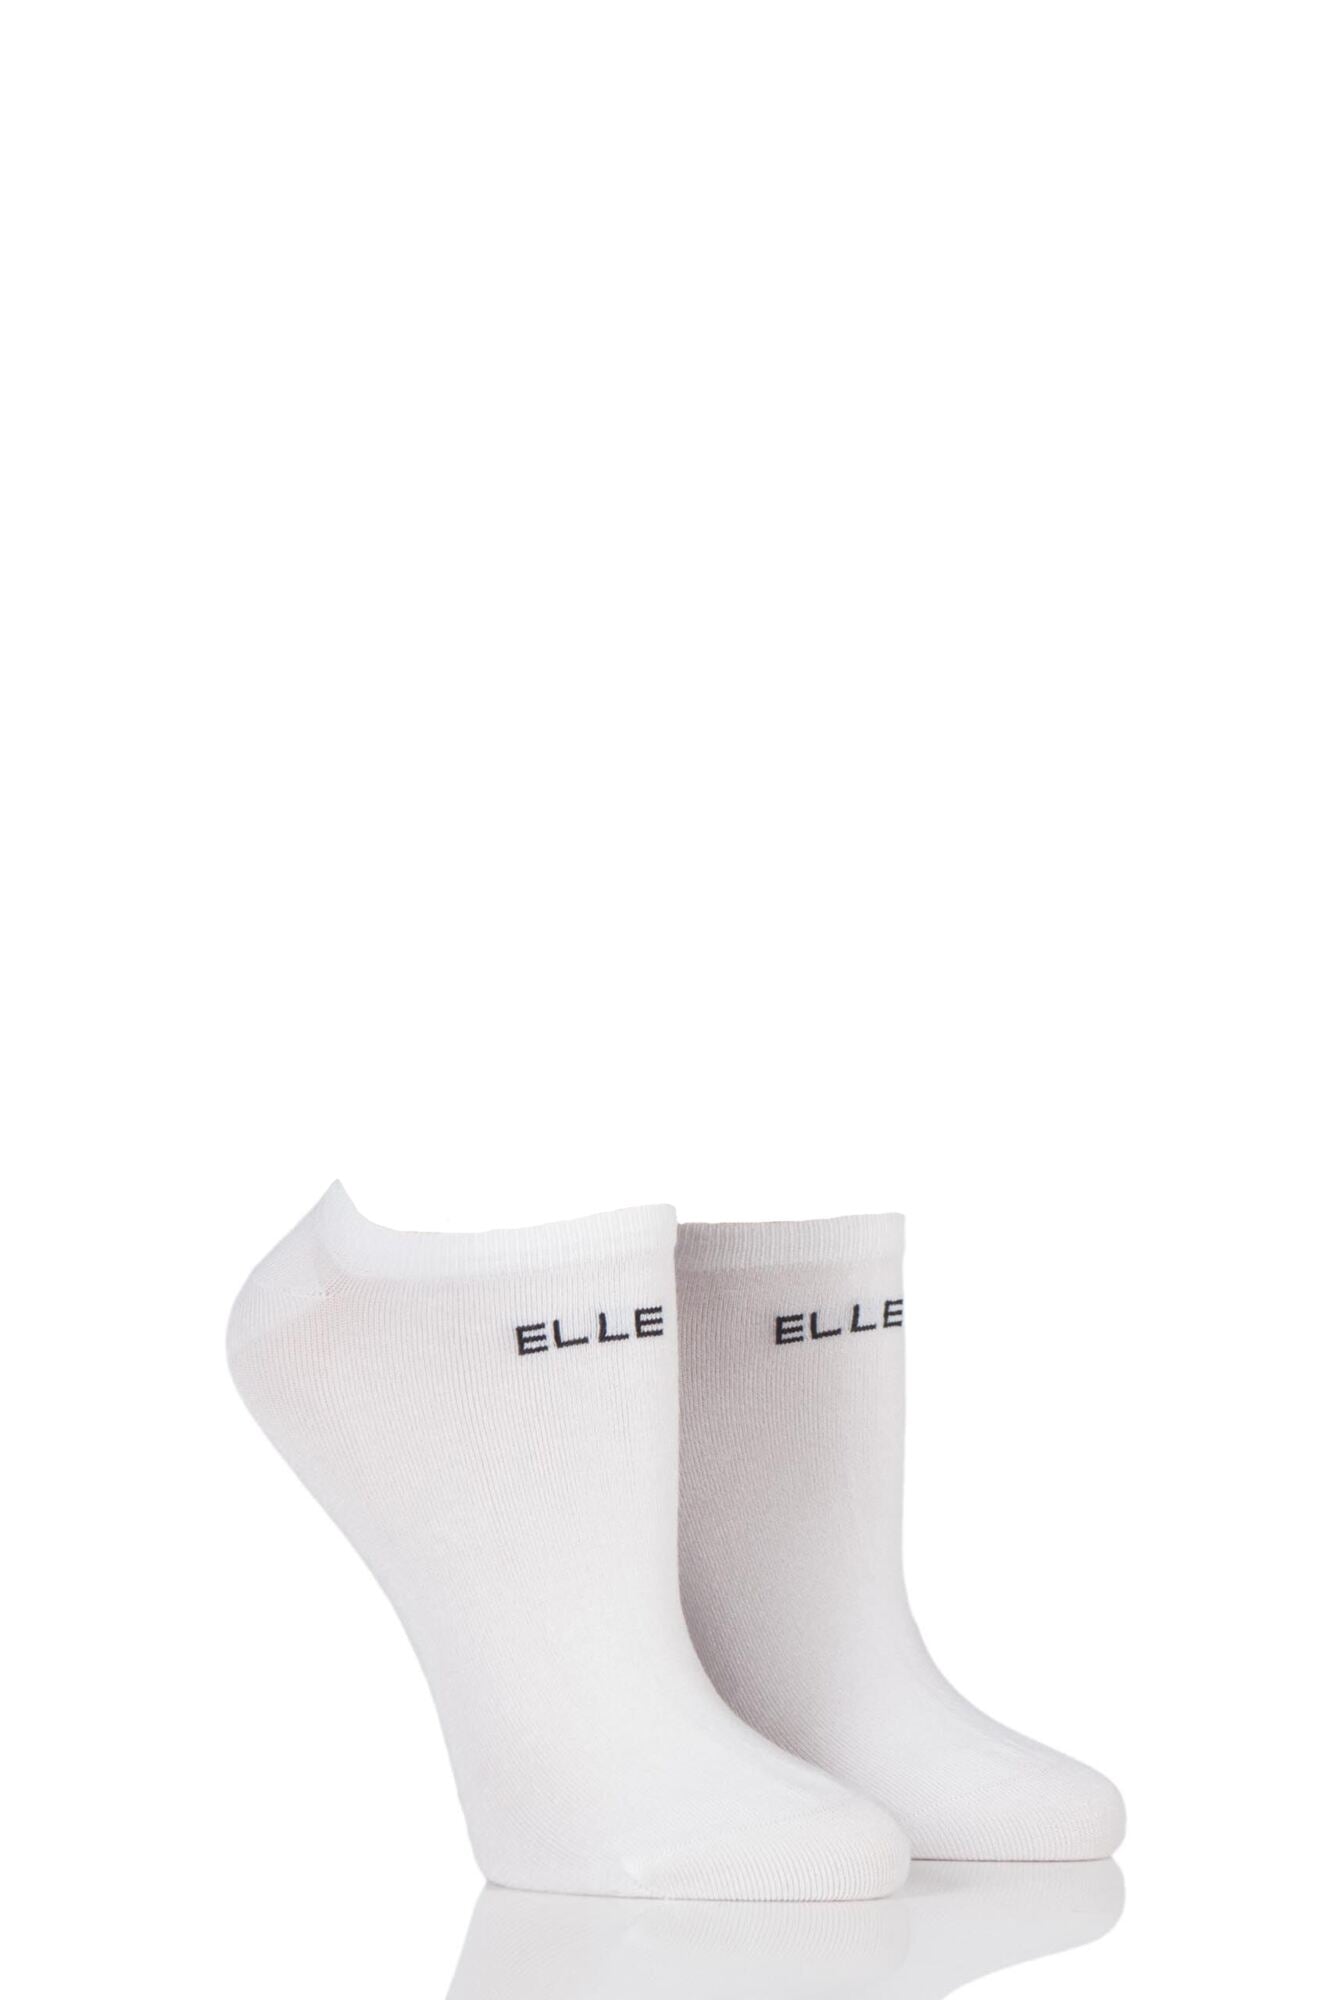 Elle-Bamboo No-Show Socks-White